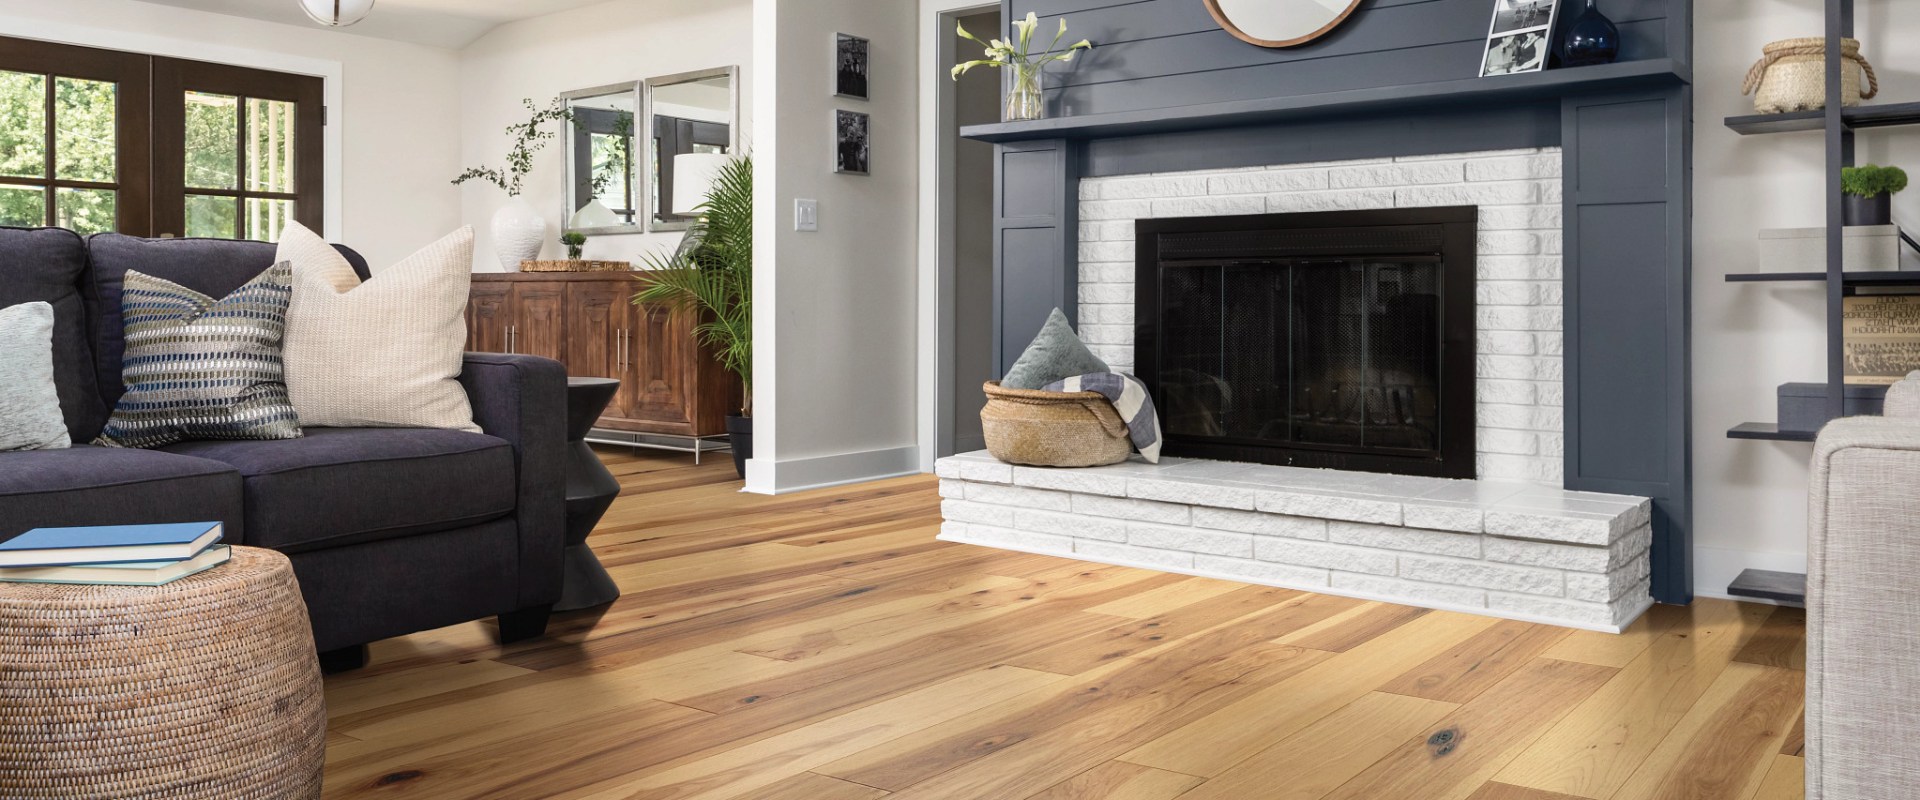 Why engineered hardwood flooring?